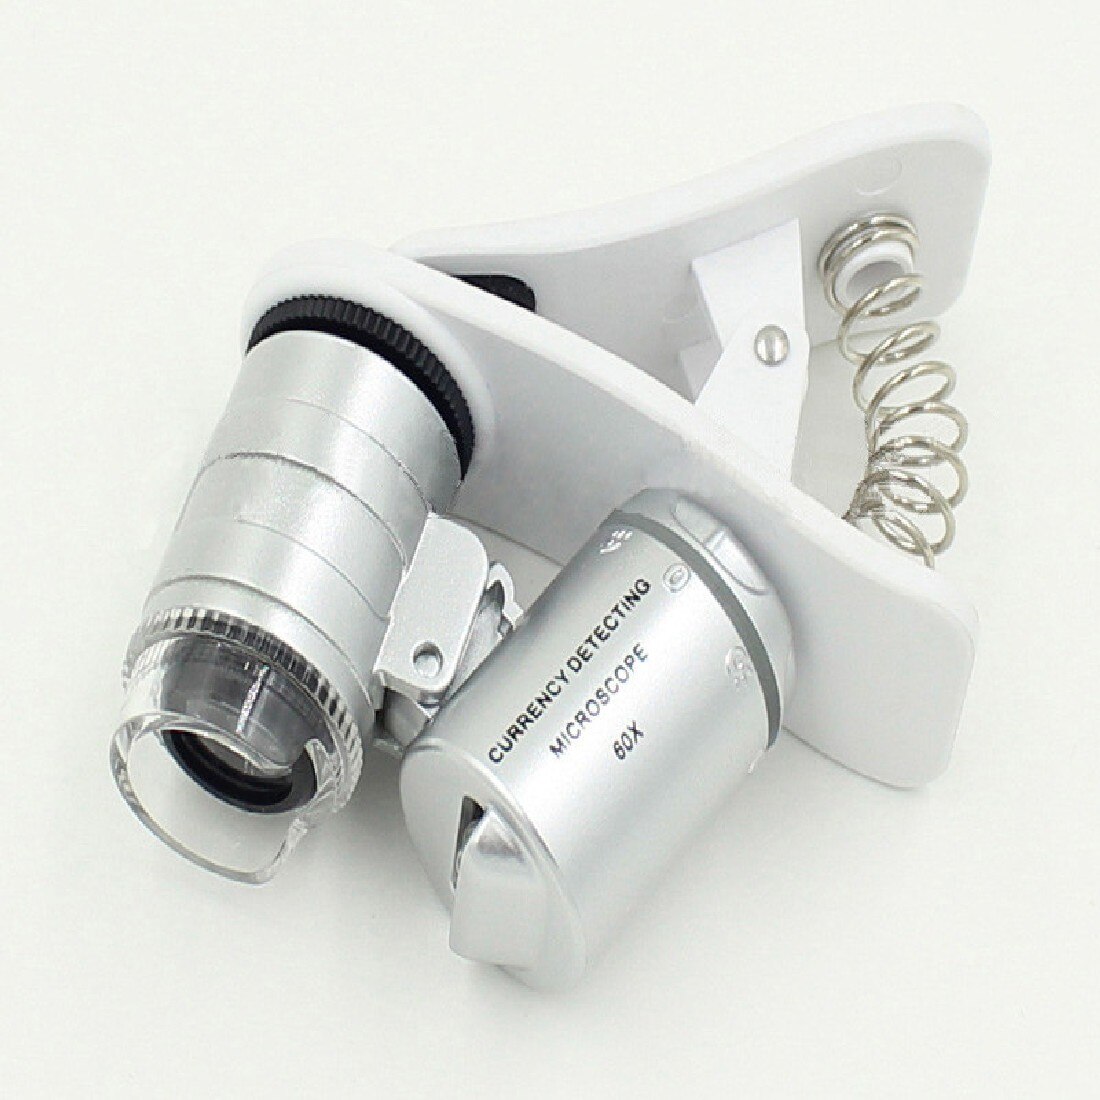 1 stk universal 3 leds klip mobiltelefon mikroskop forstørrelsesglas mikro linse 60x optisk zoom teleskop kamera linse